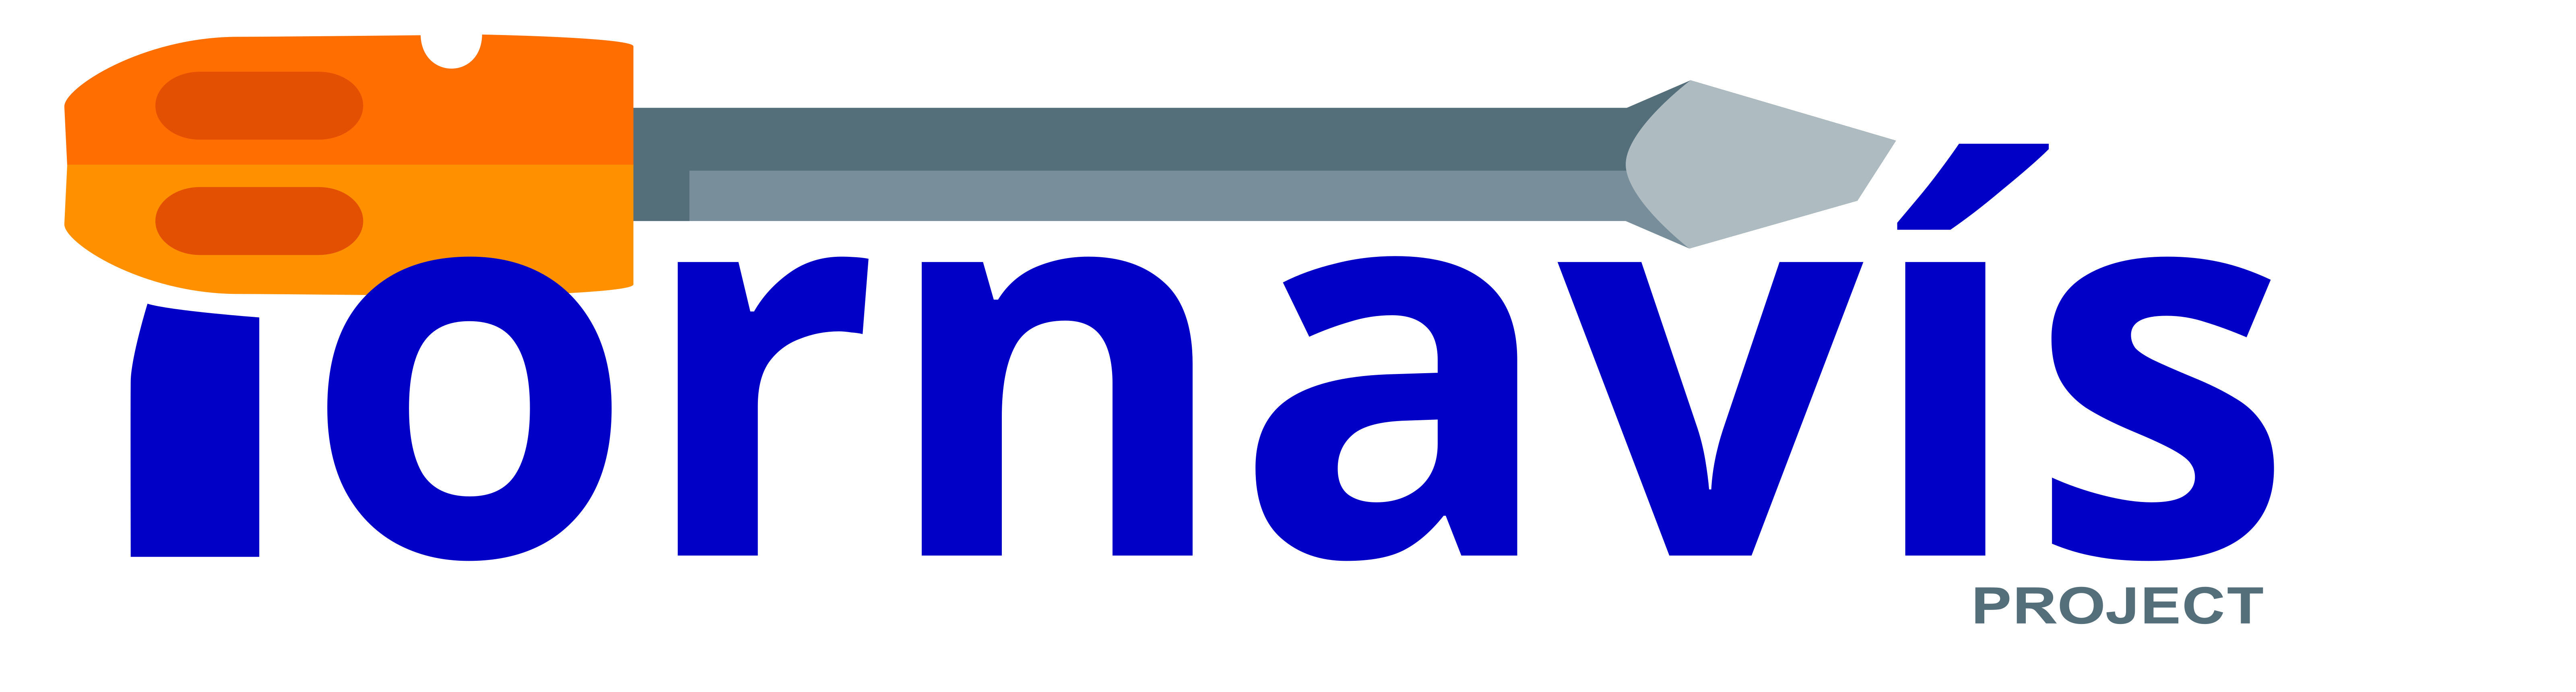 Tornavis logo